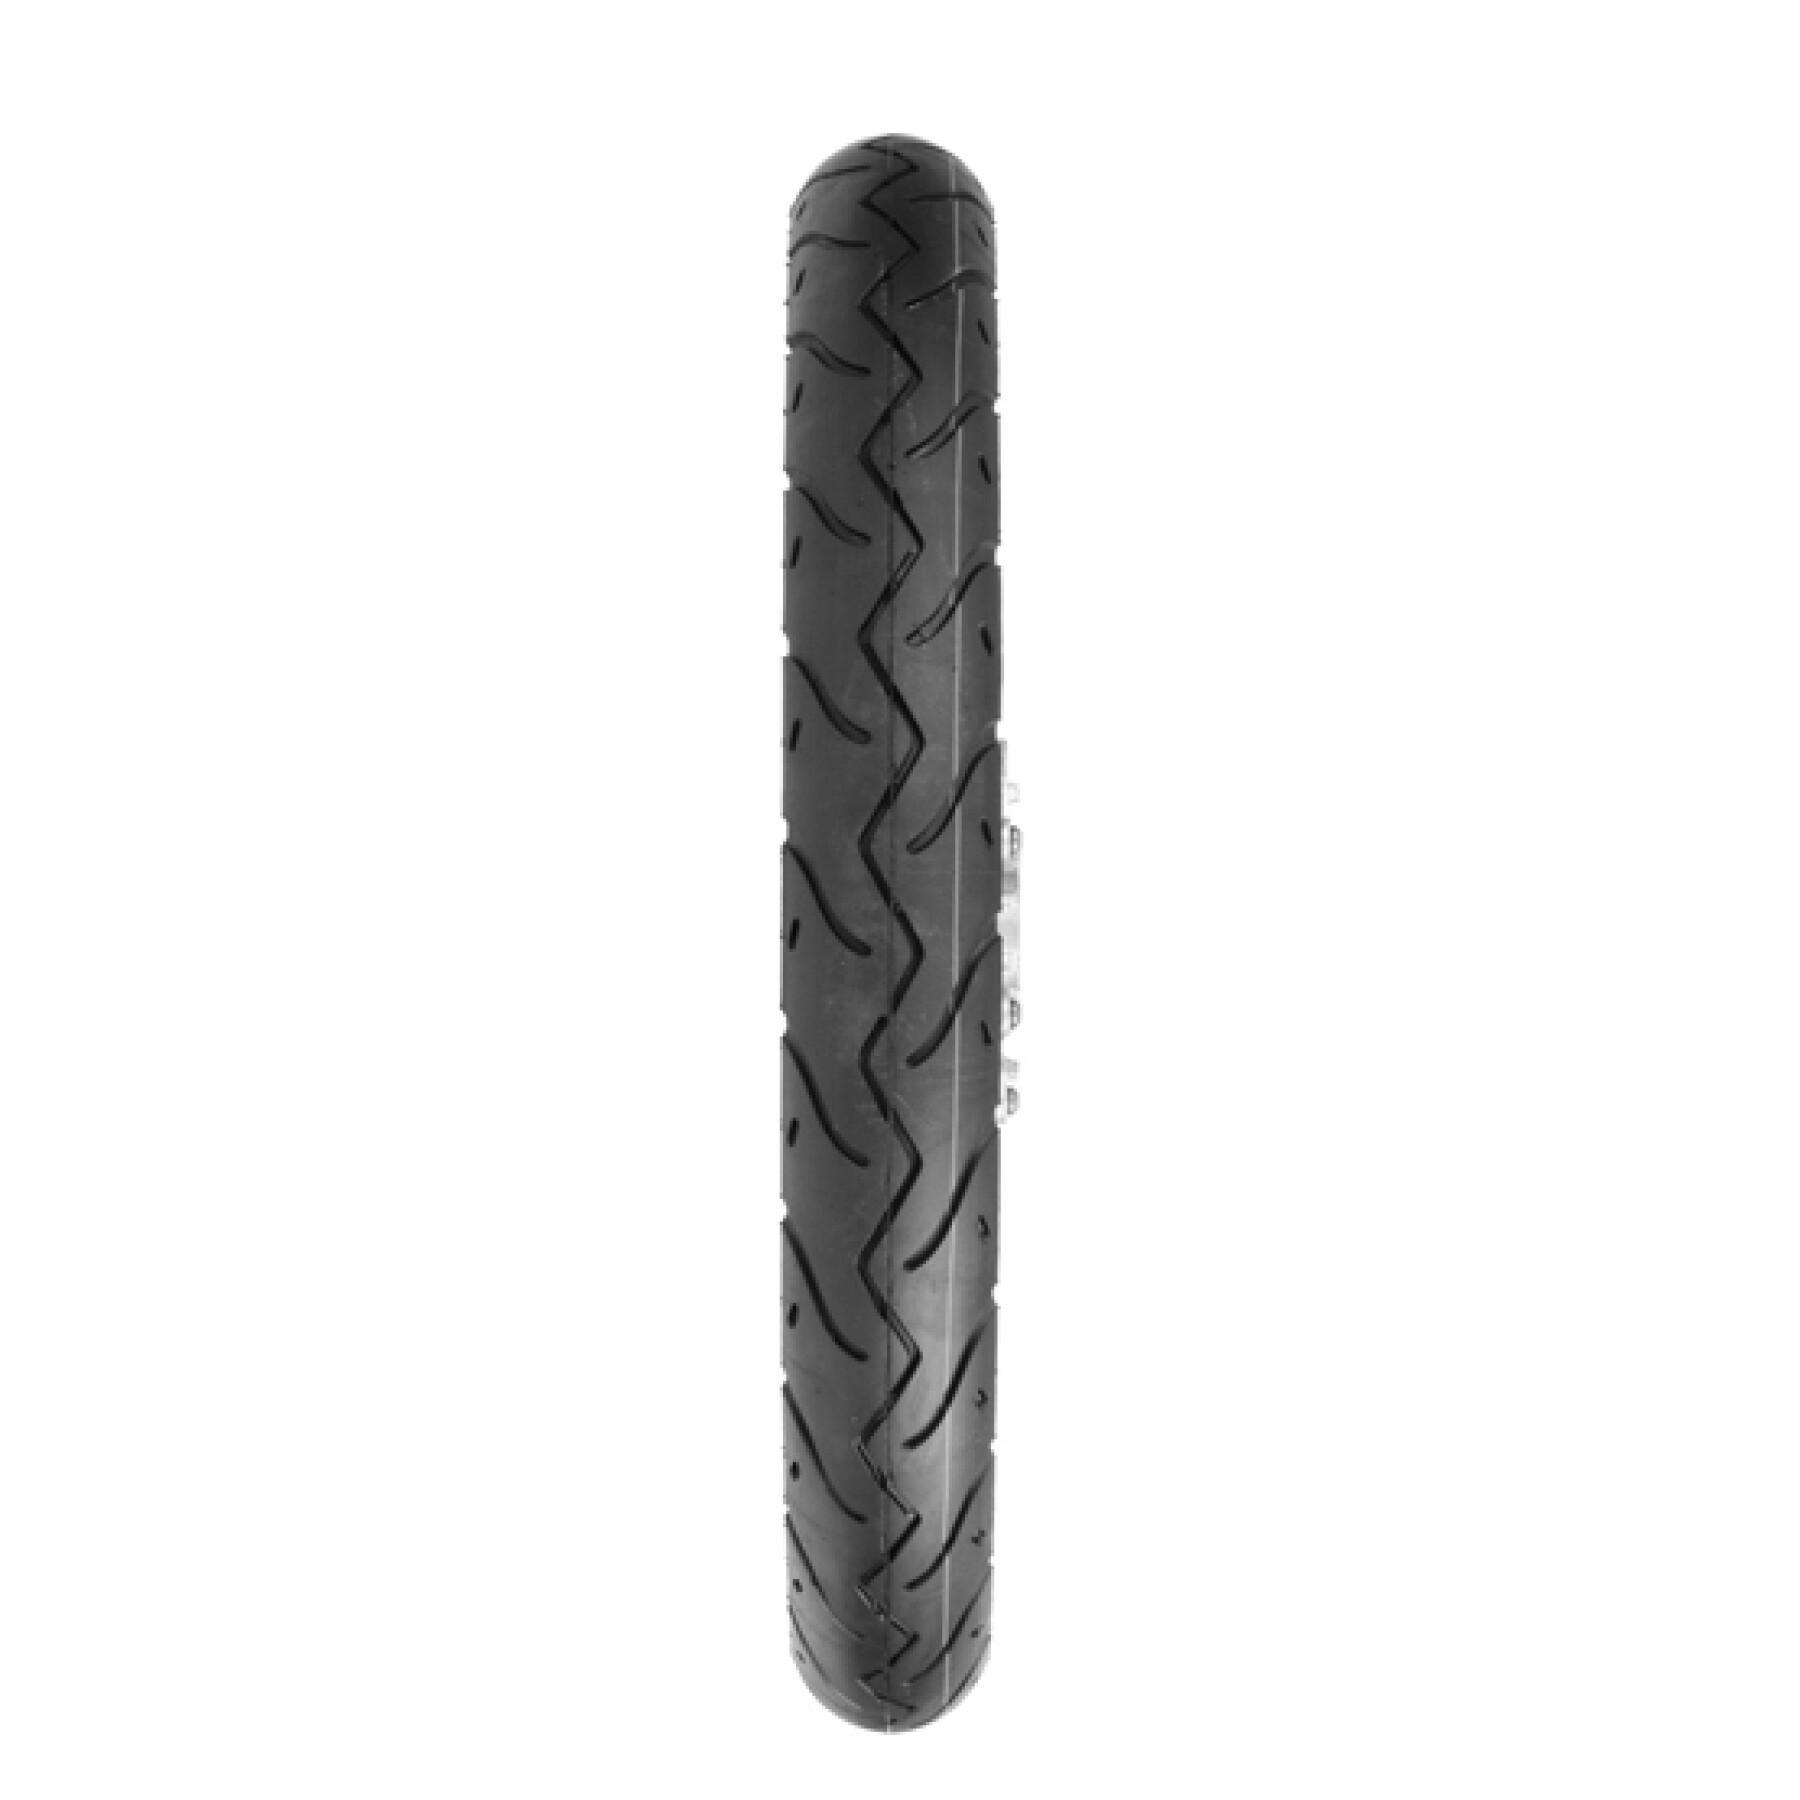 Neumáticos Vee Rubber 2.00-17 VRM 099 (10)